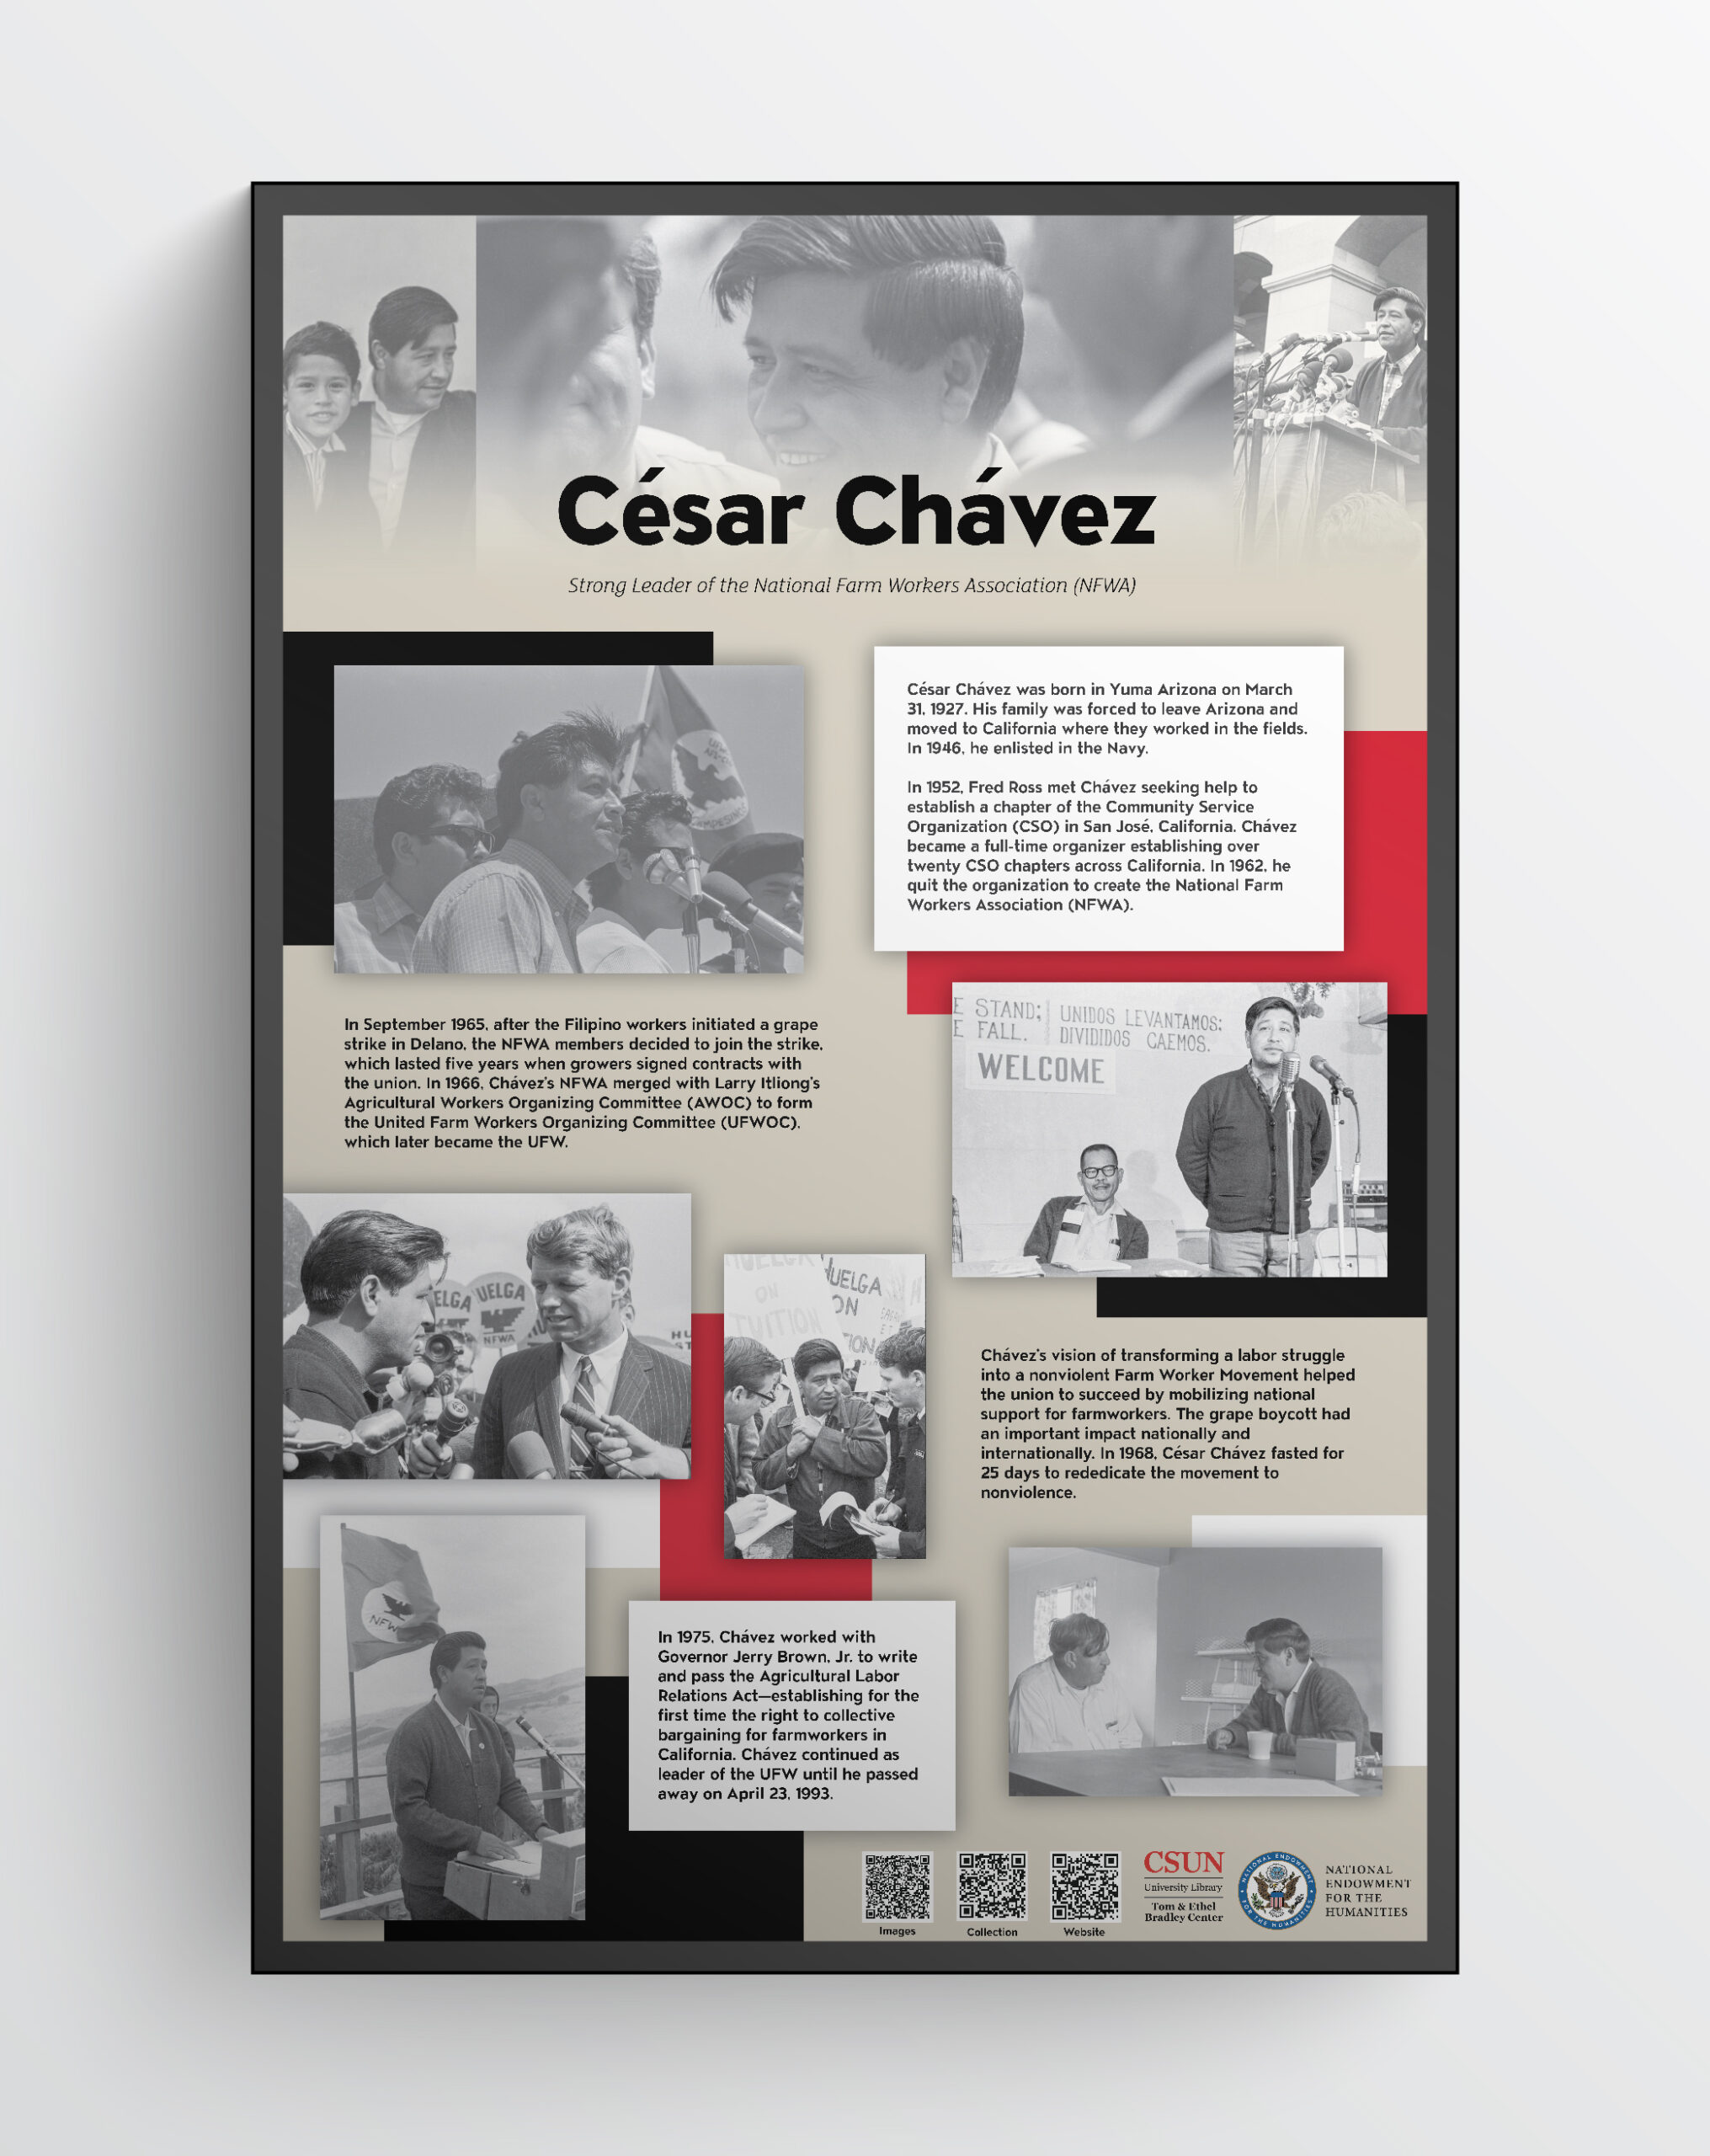 Panel of César Chávez.